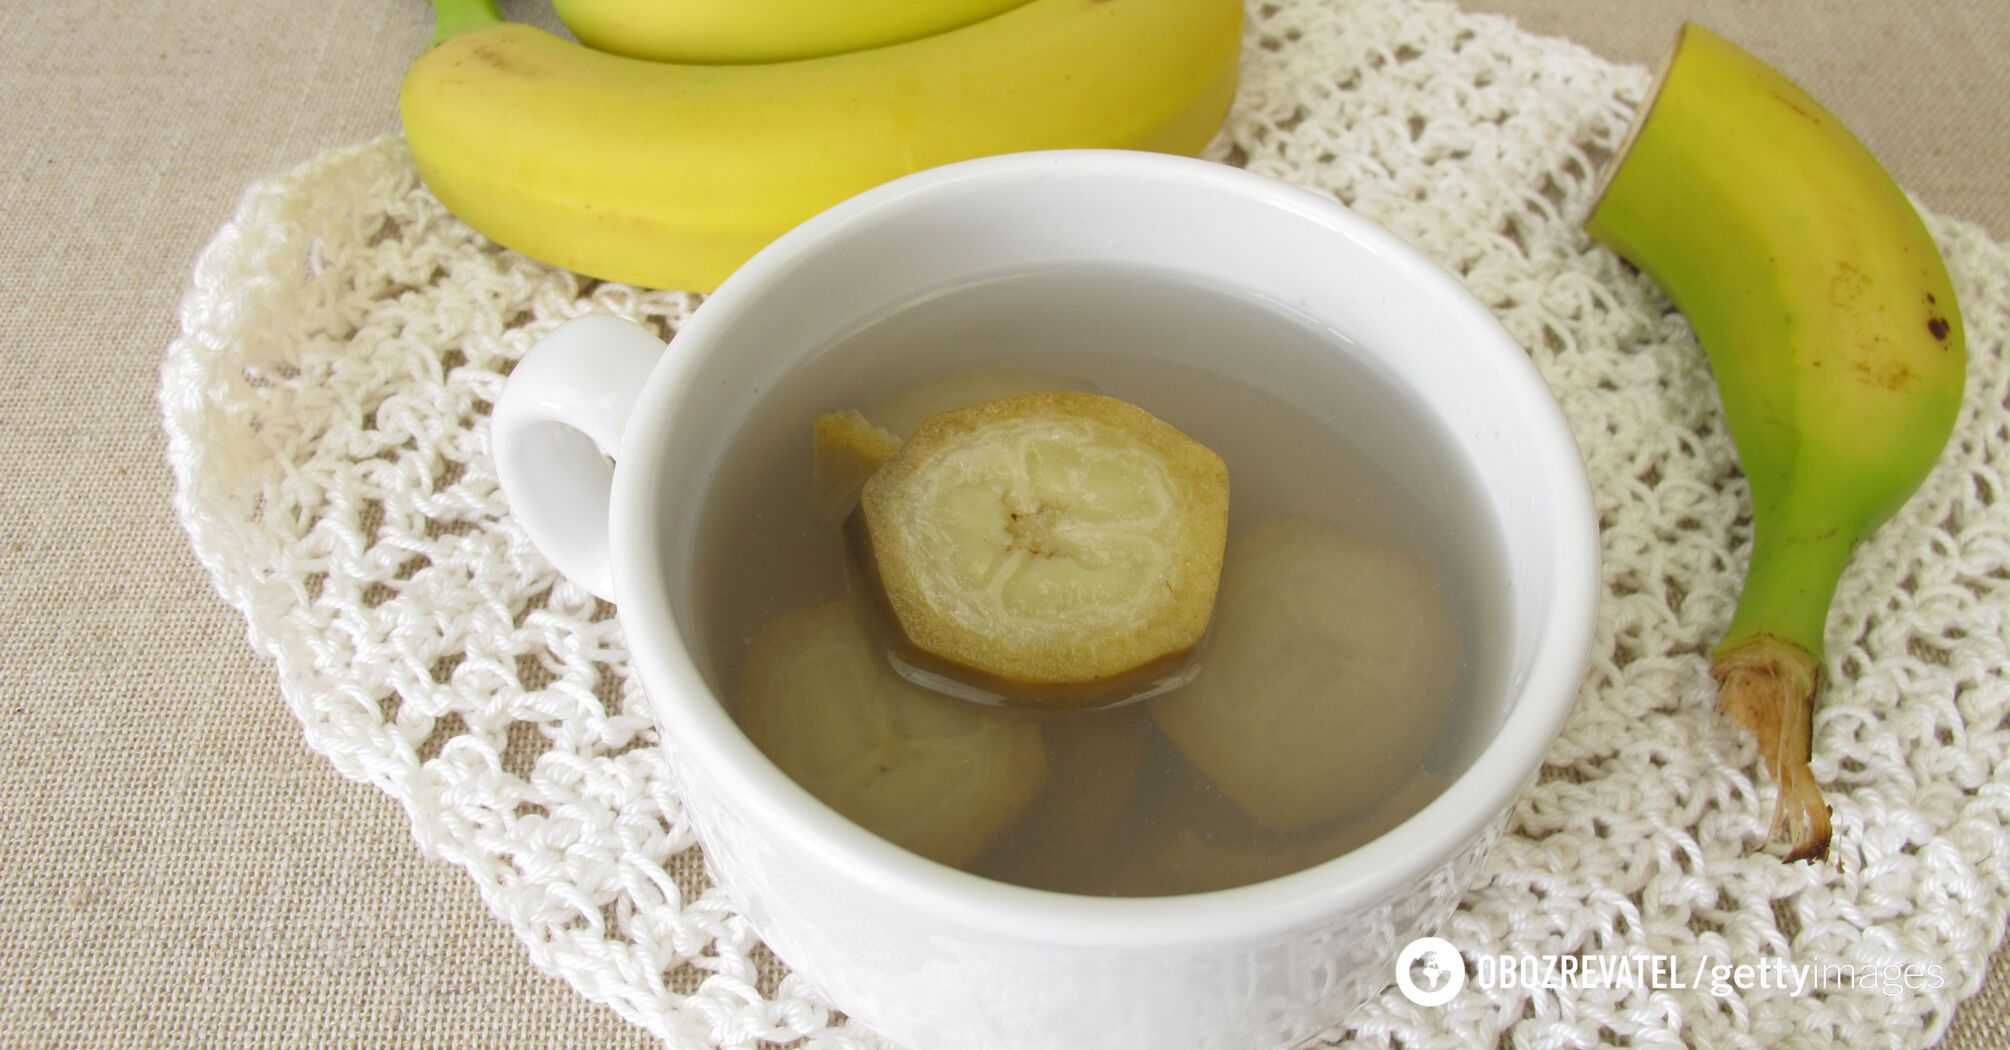 Banana tea reduces the risk of cardiovascular disease